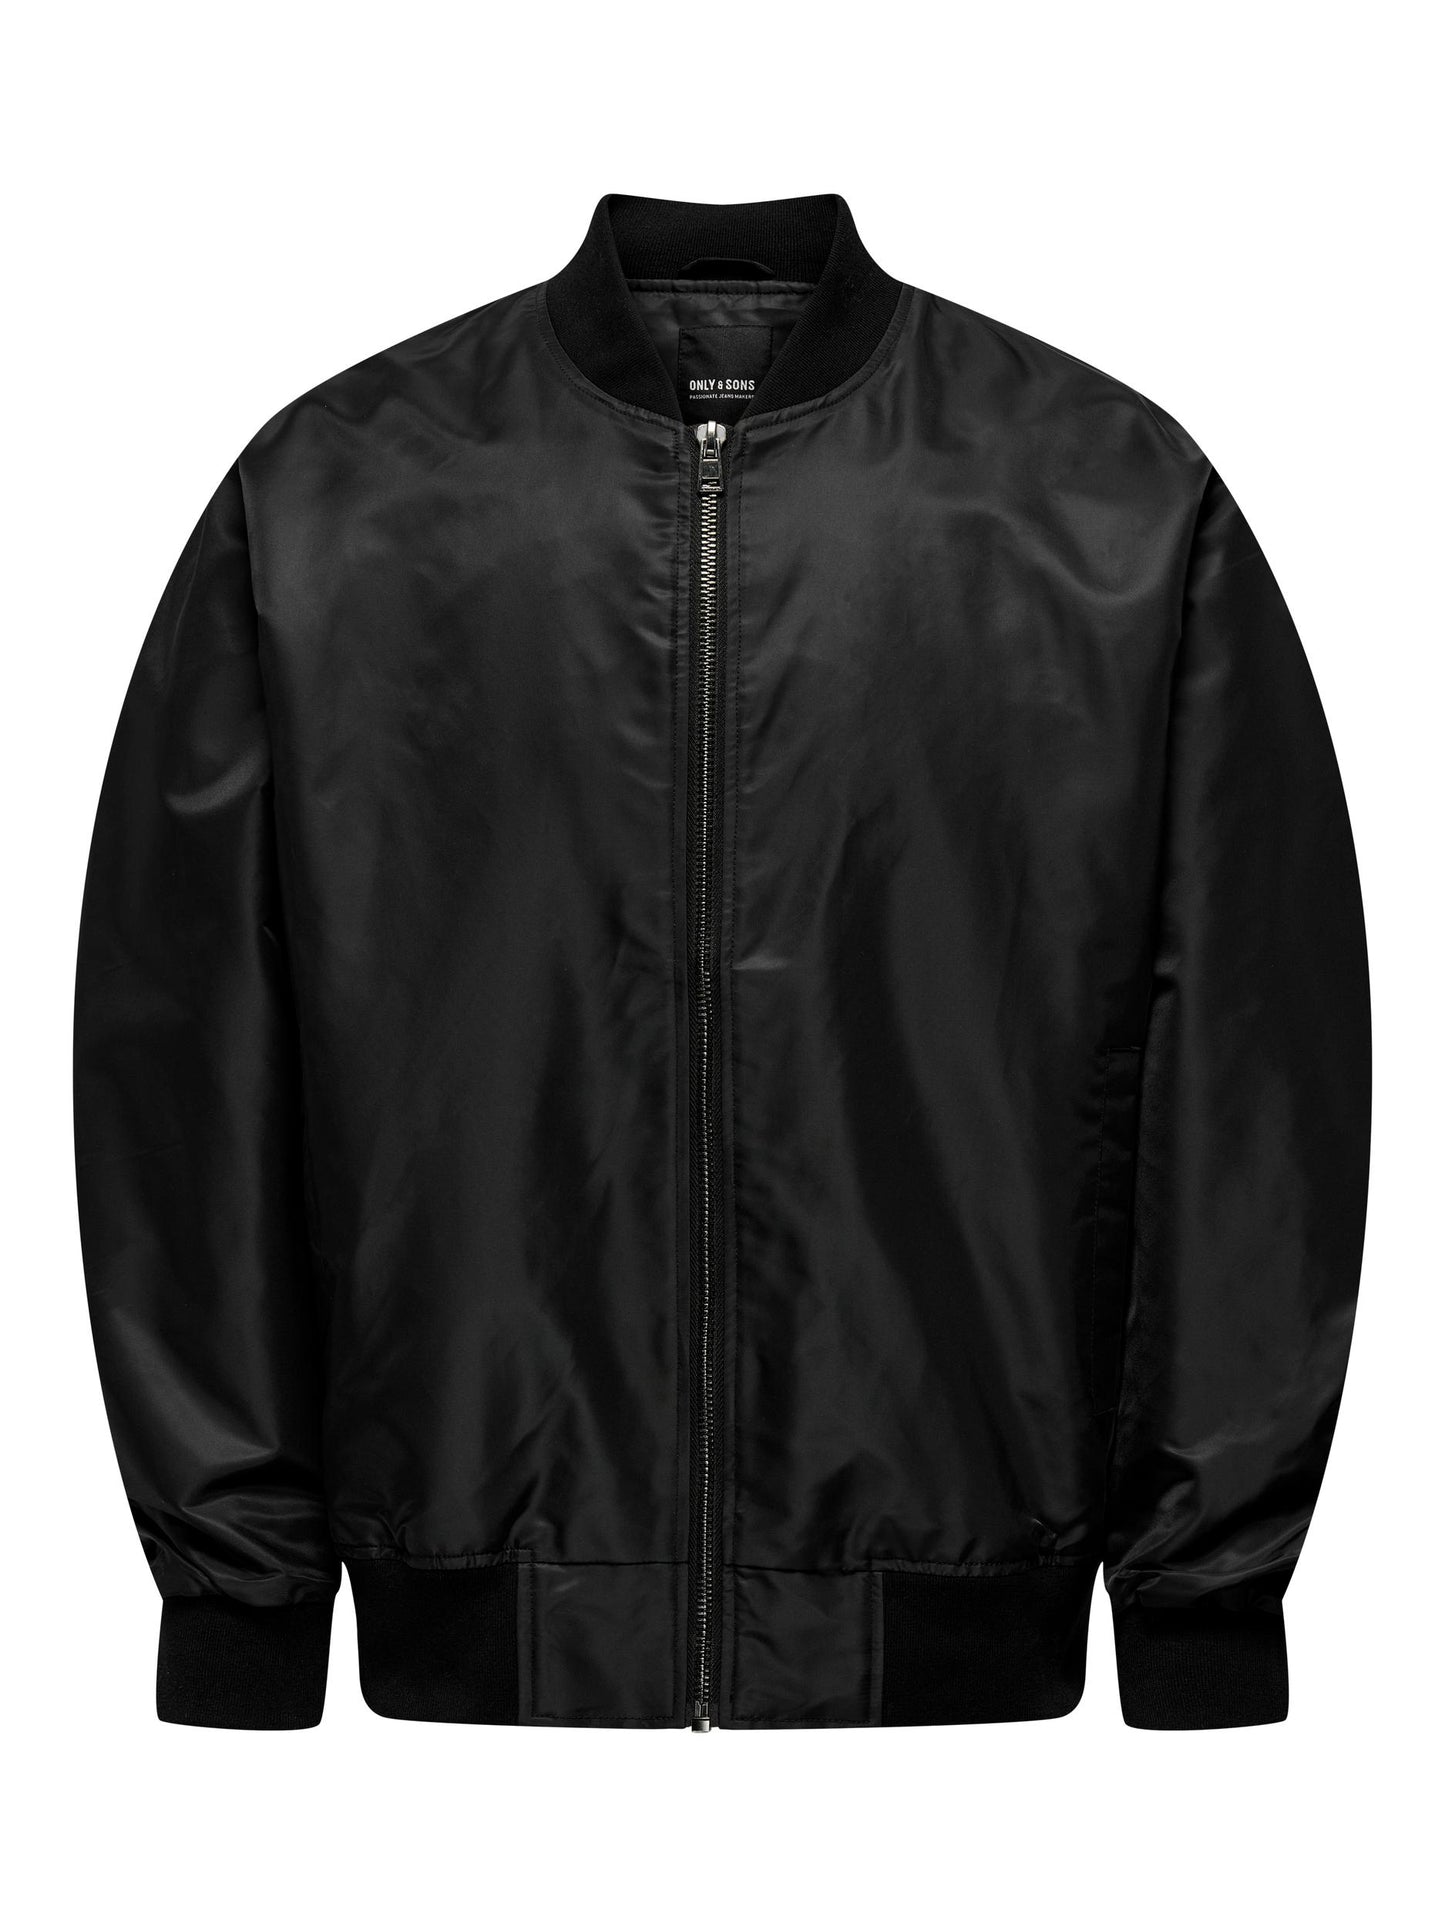 m jackets - ONLY&SONS - Victor Bomber Jacket - PLENTY